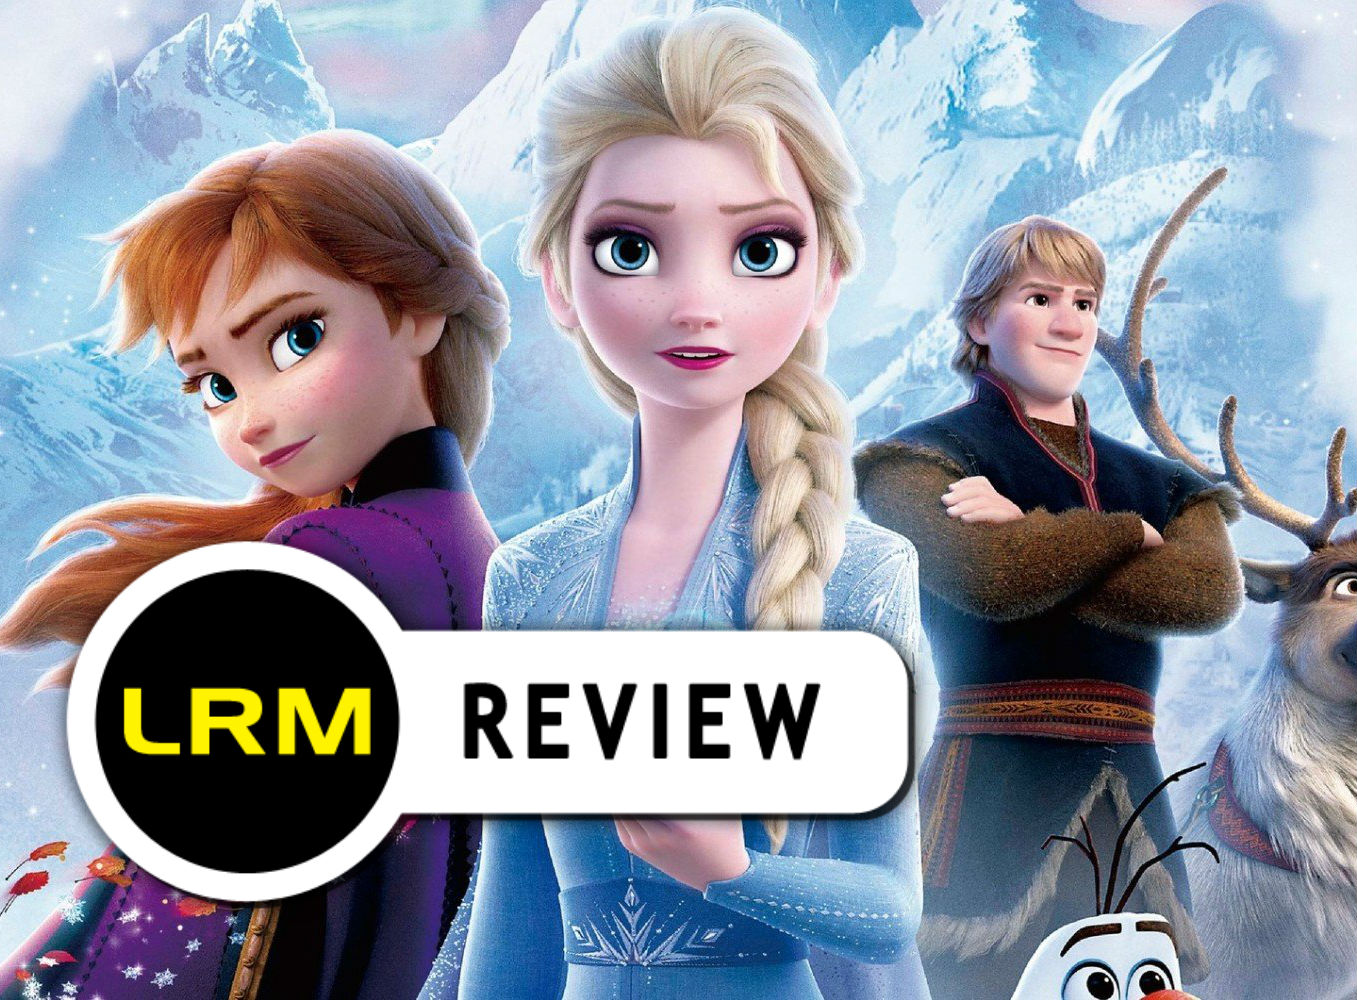 Frozen II Review: An Even More Heartwarming Tale